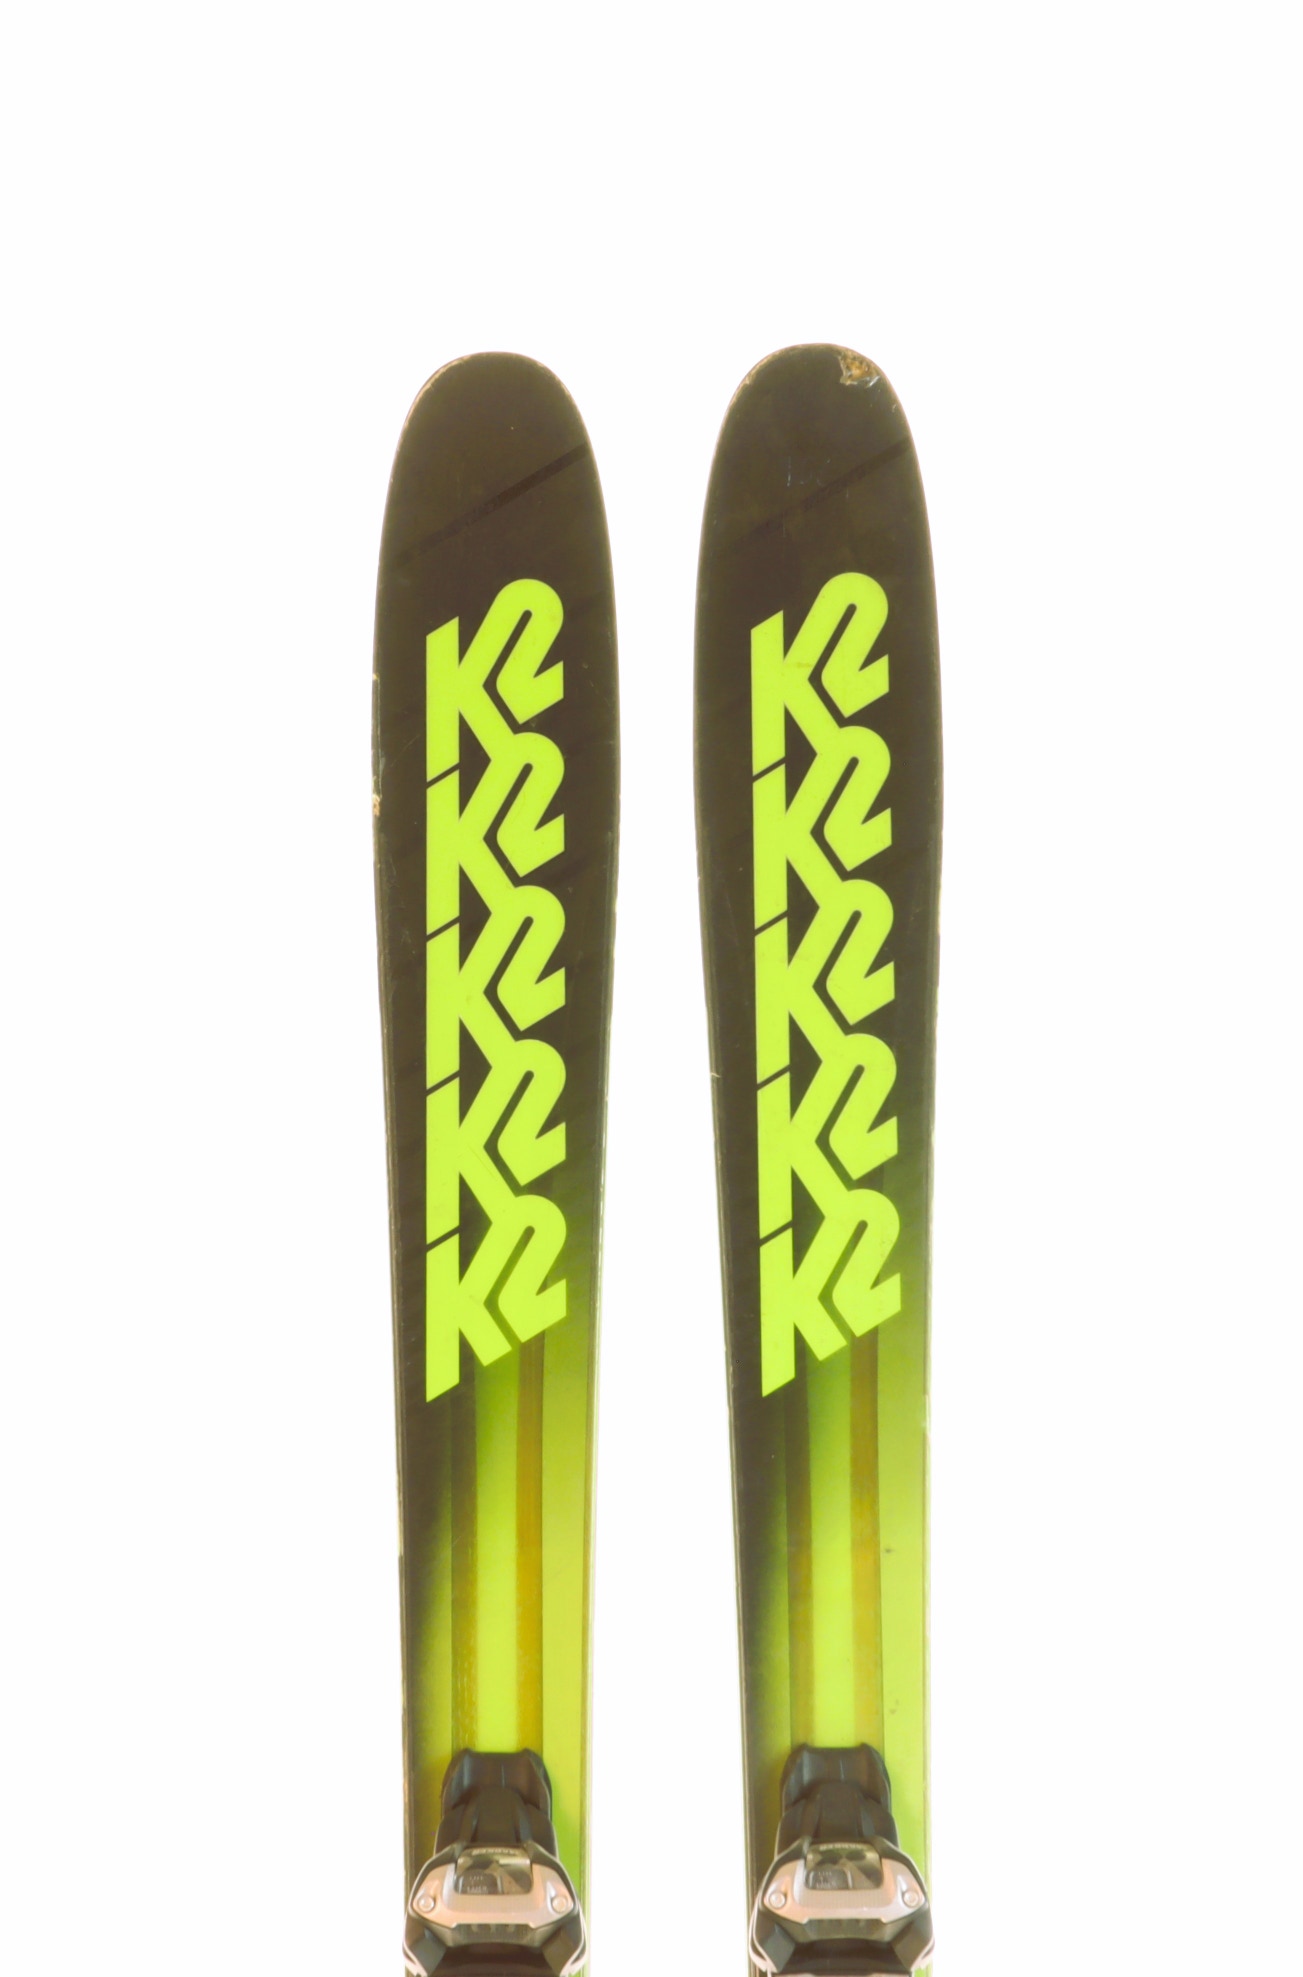 Used 2018 K2 Pinnacle 95 Skis with Tyrolia Sympro SP 10 Bindings Size 170 (Option 230972)